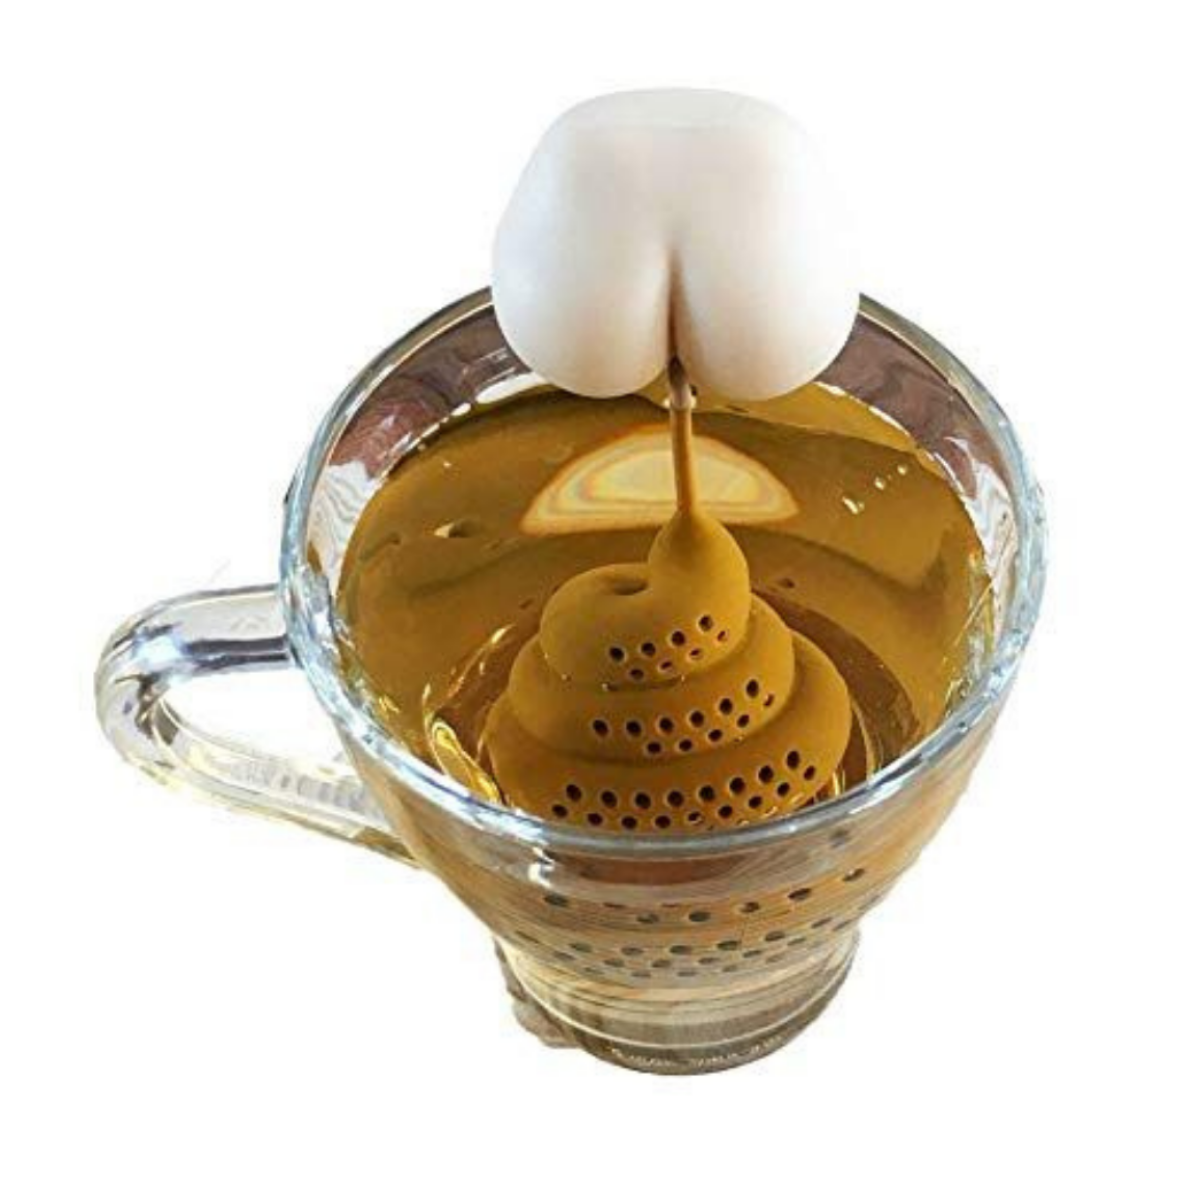 Creative Tea Infuser Silicone Poop Shaped Funny Herbal Tea Bag